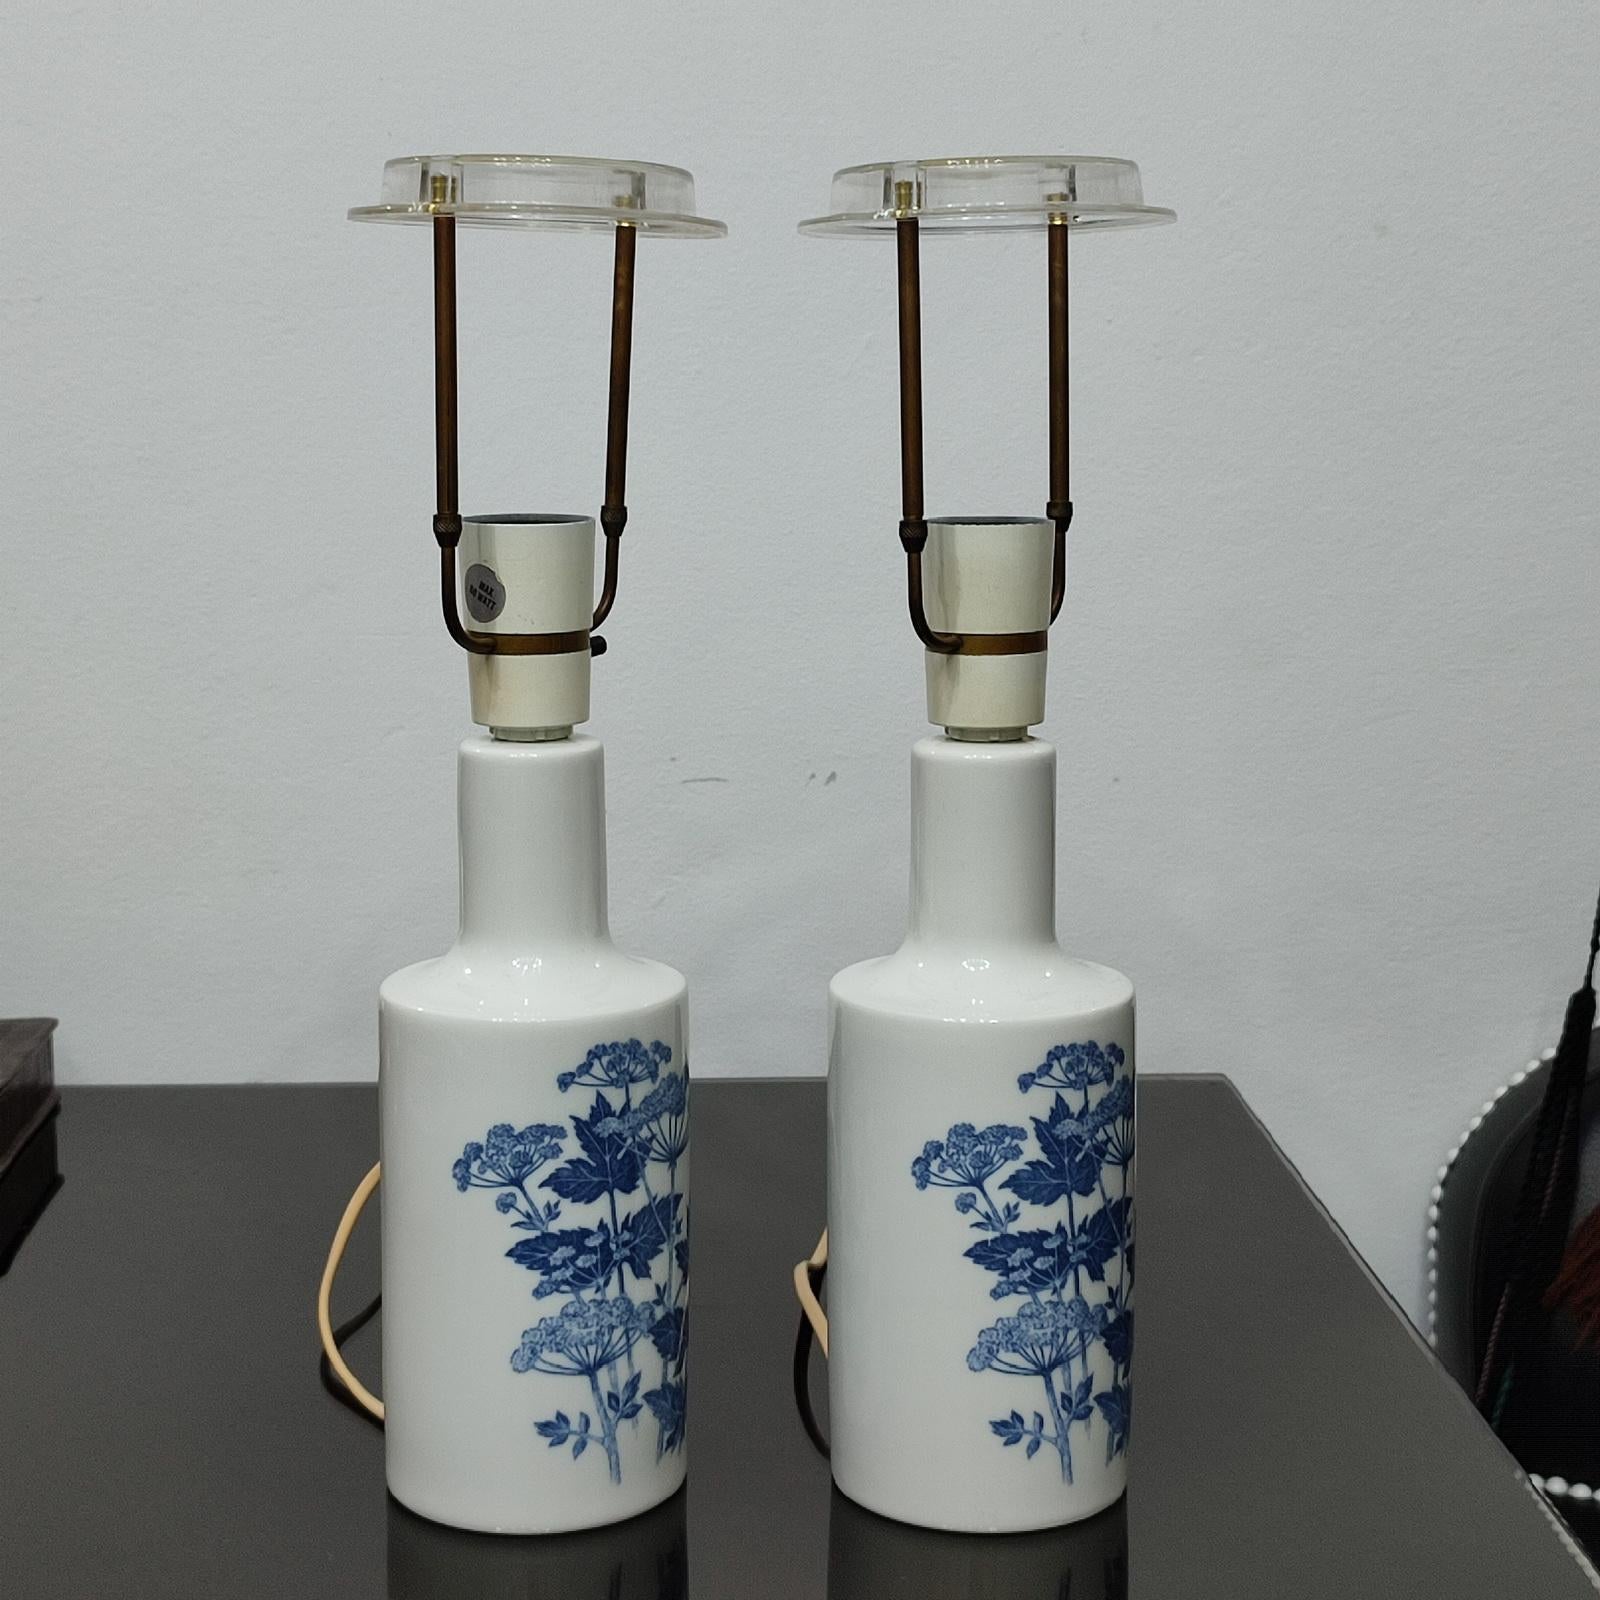 Mid-20th Century Pair of Porcelain Table Lamps by Fog & Morup for Royal Copenhagen, Denmark 1960s For Sale